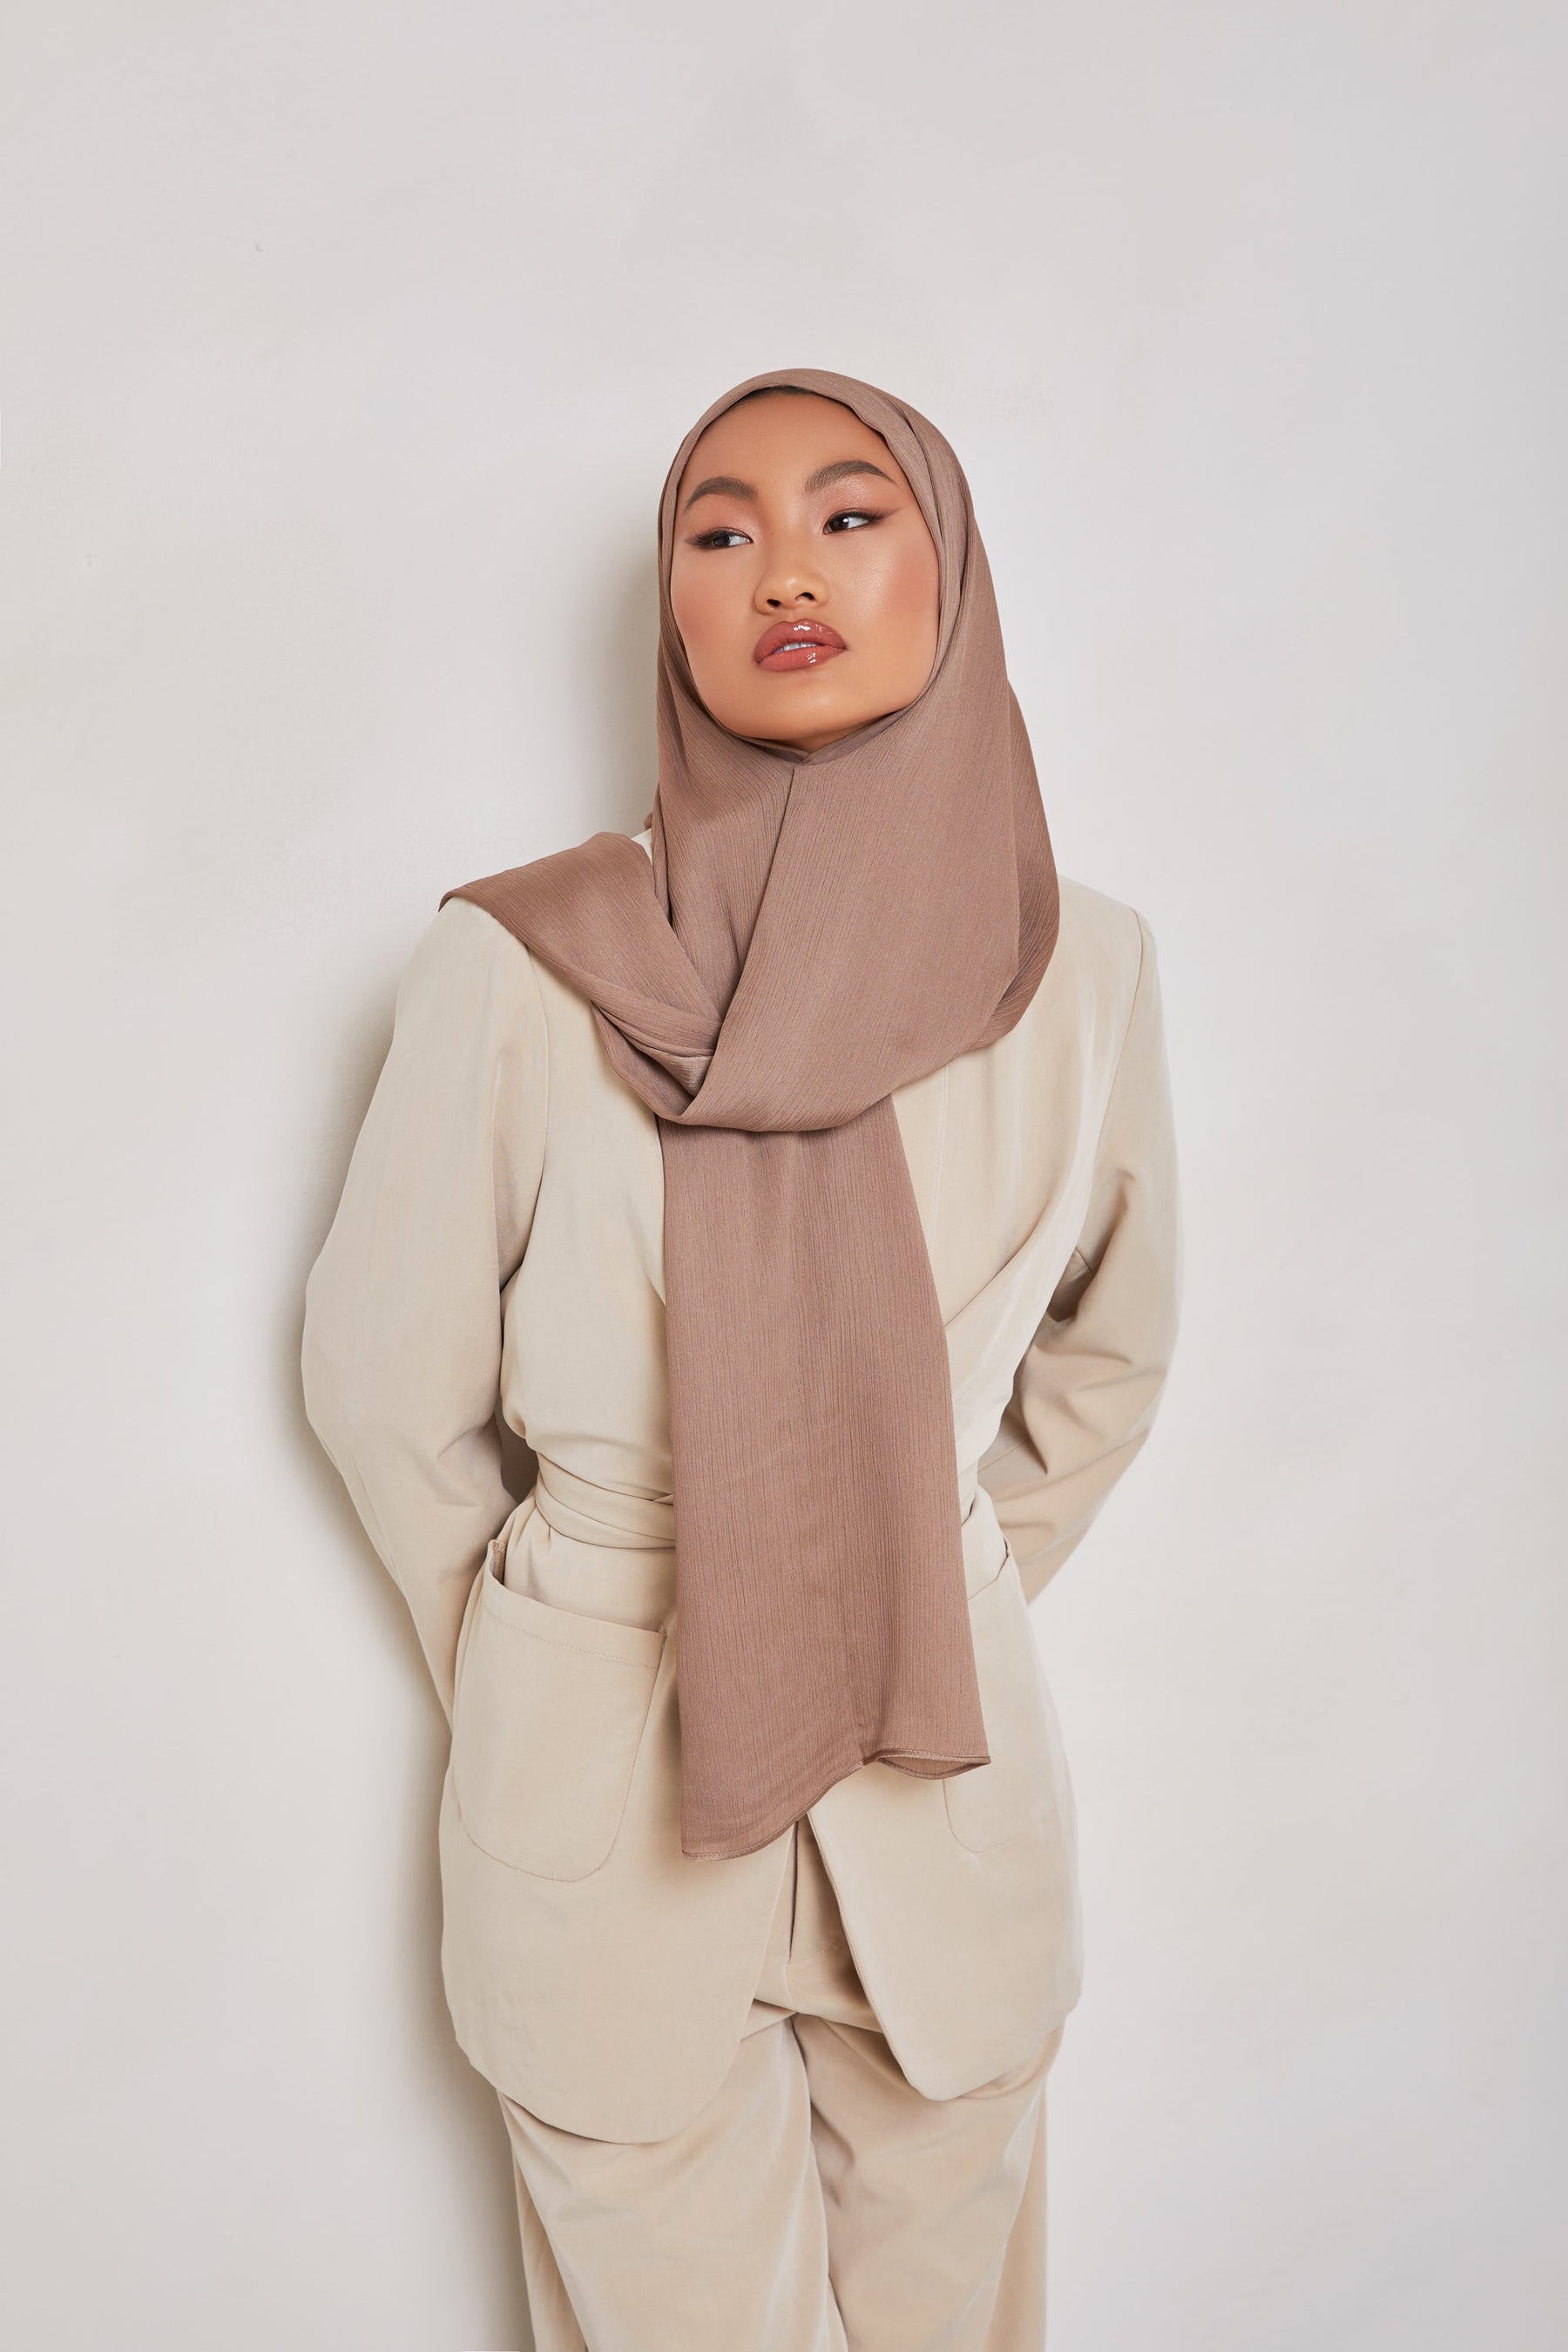 TEXTURE Satin Crepe Hijab - Walnut Crepe Veiled Collection 